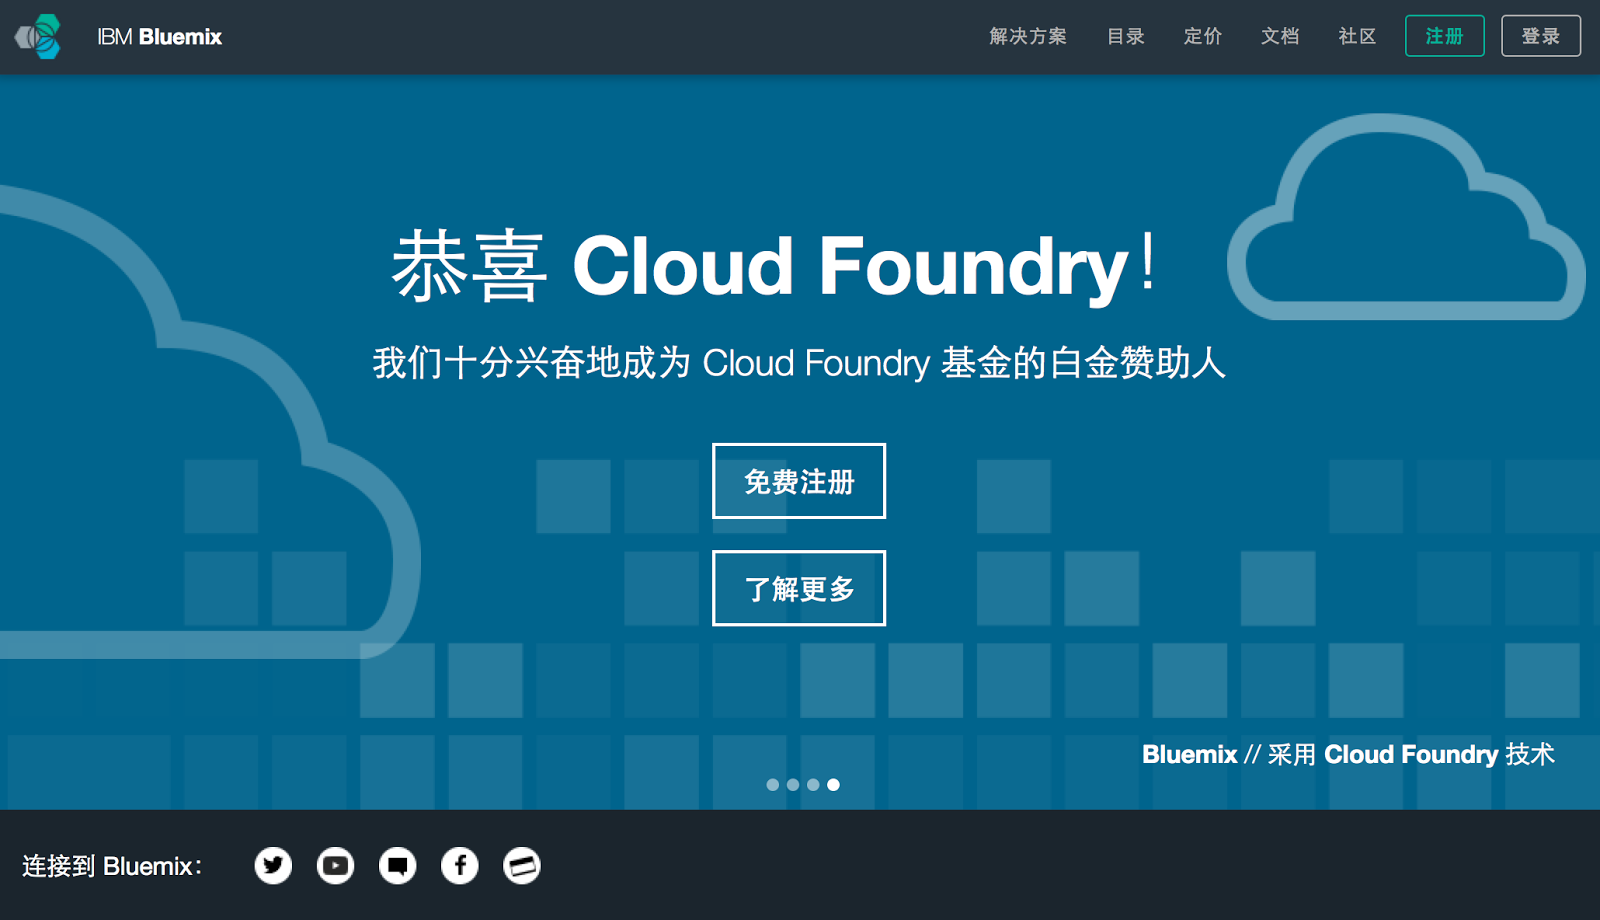 Bluemix UI Updates: Landing Page in Chinese